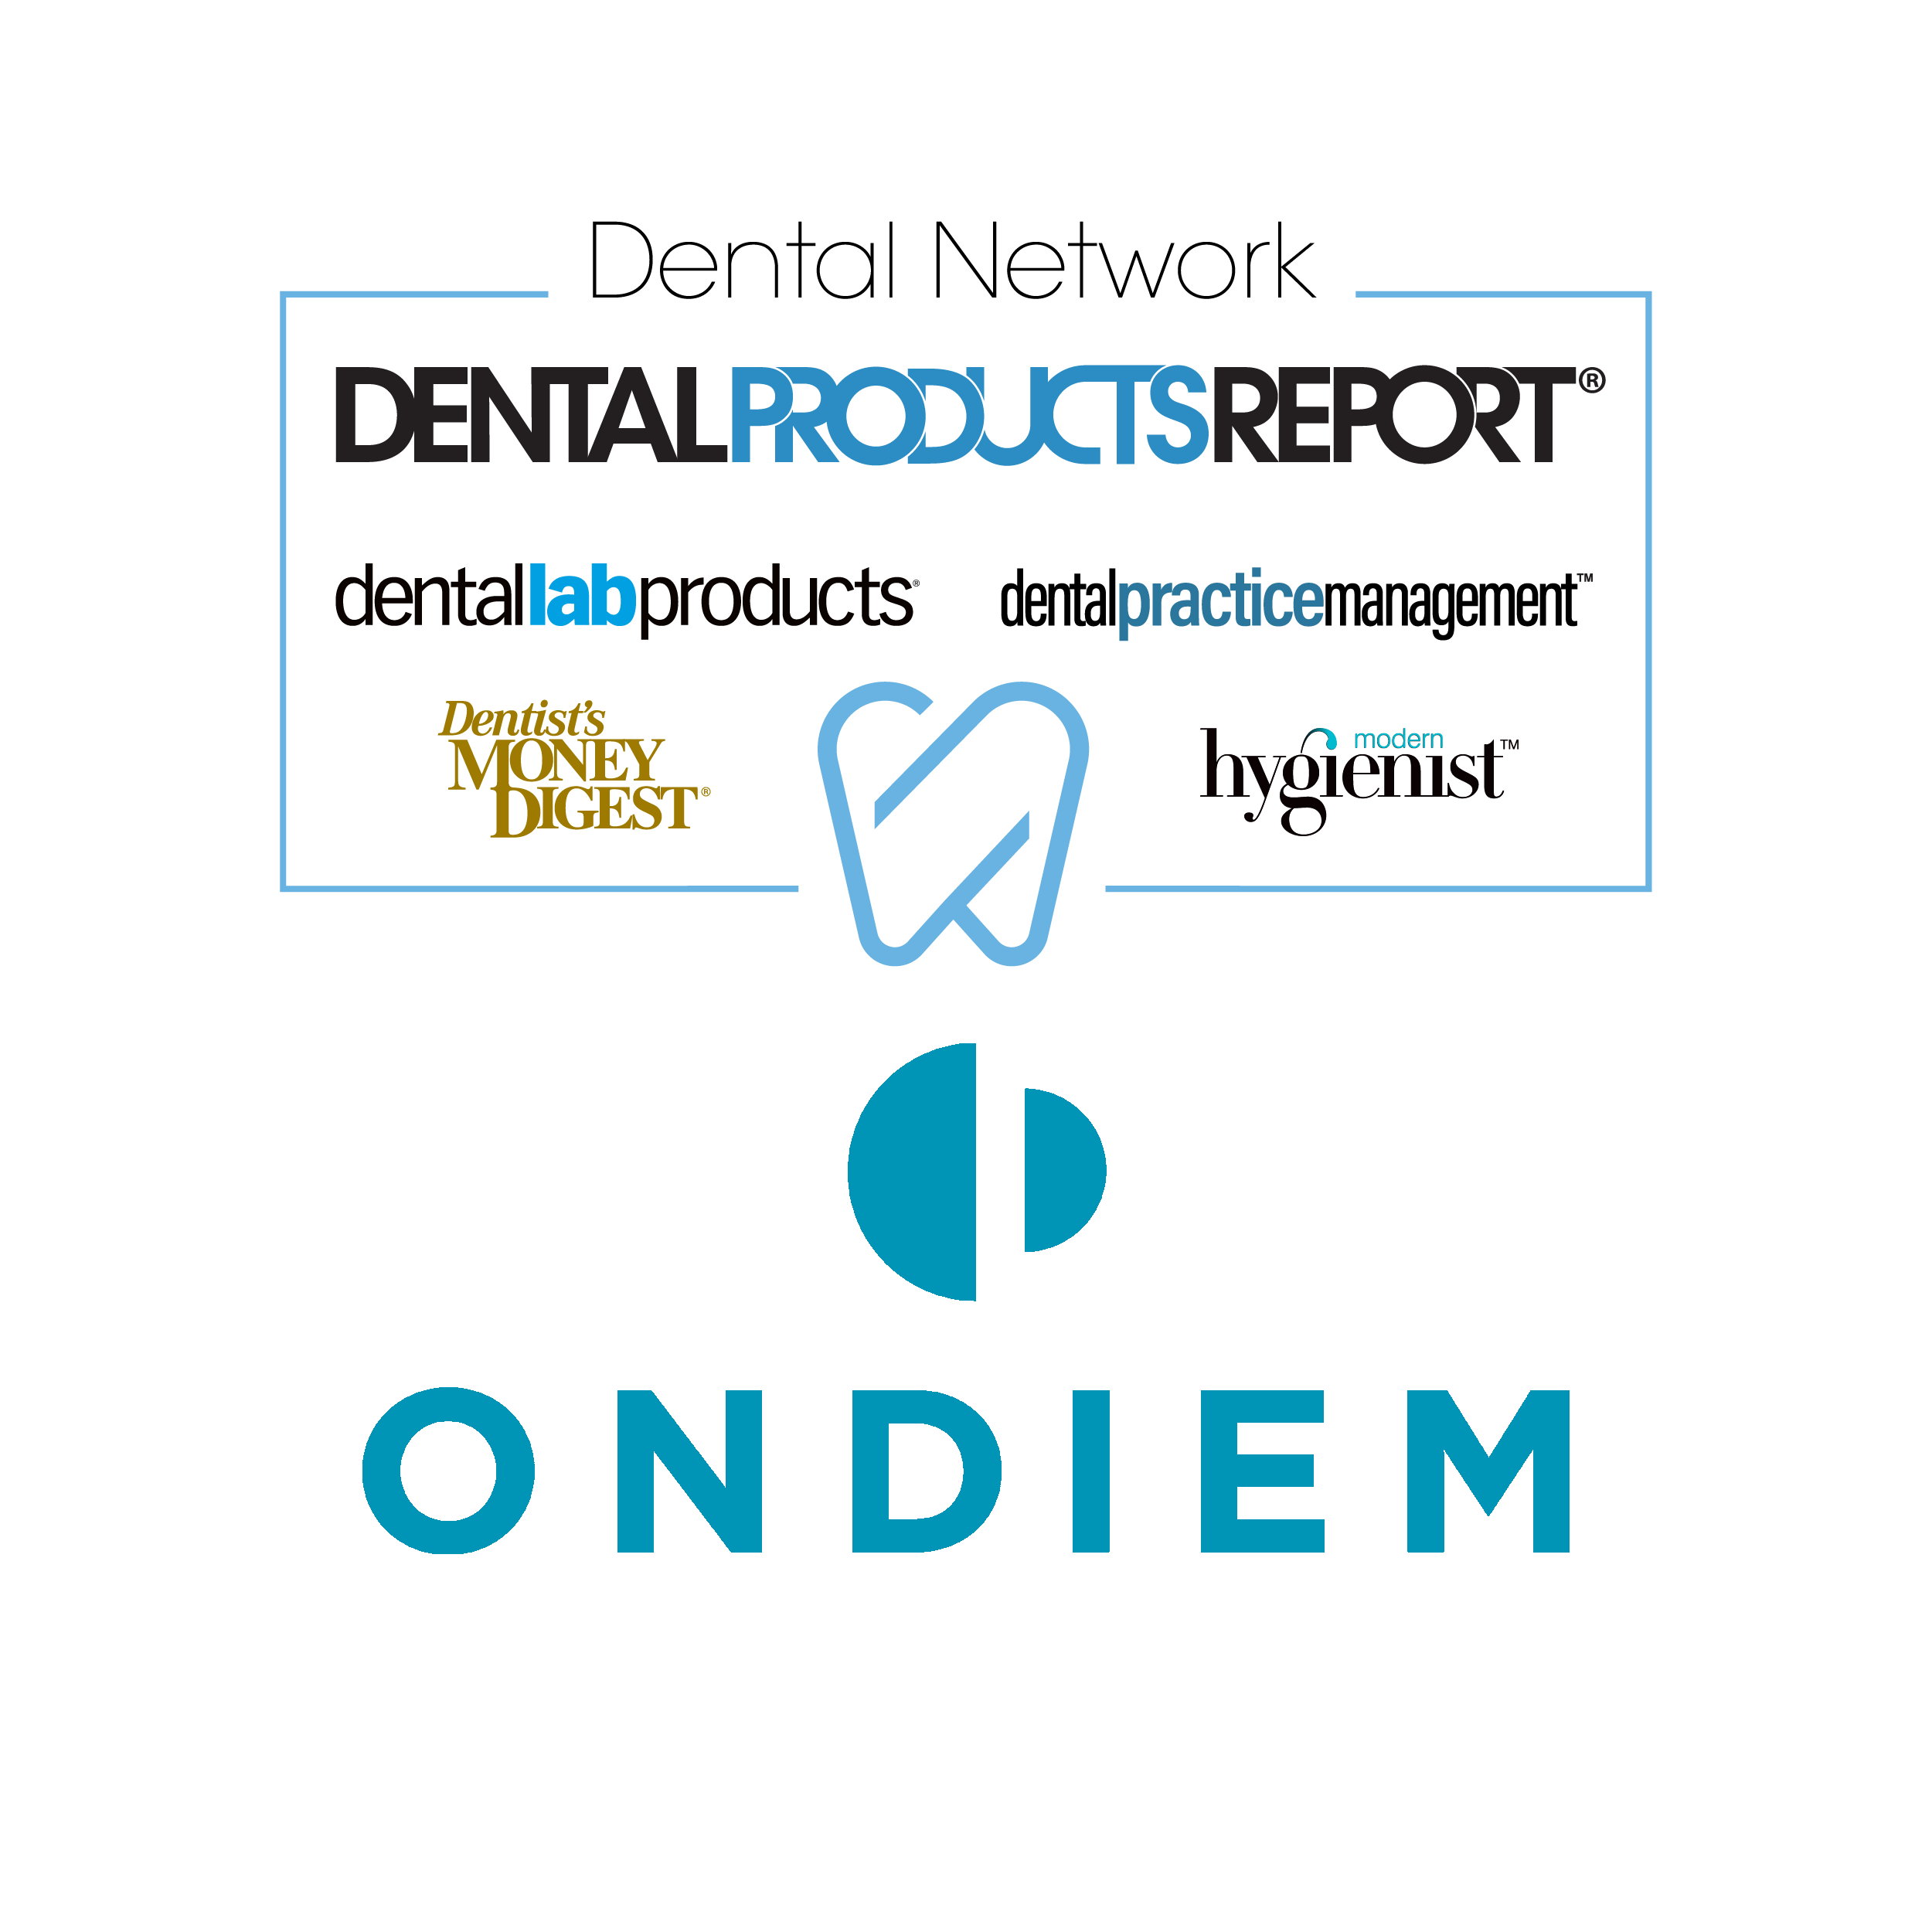 Dental Products Report Announces Strategic Partnership with onDiem